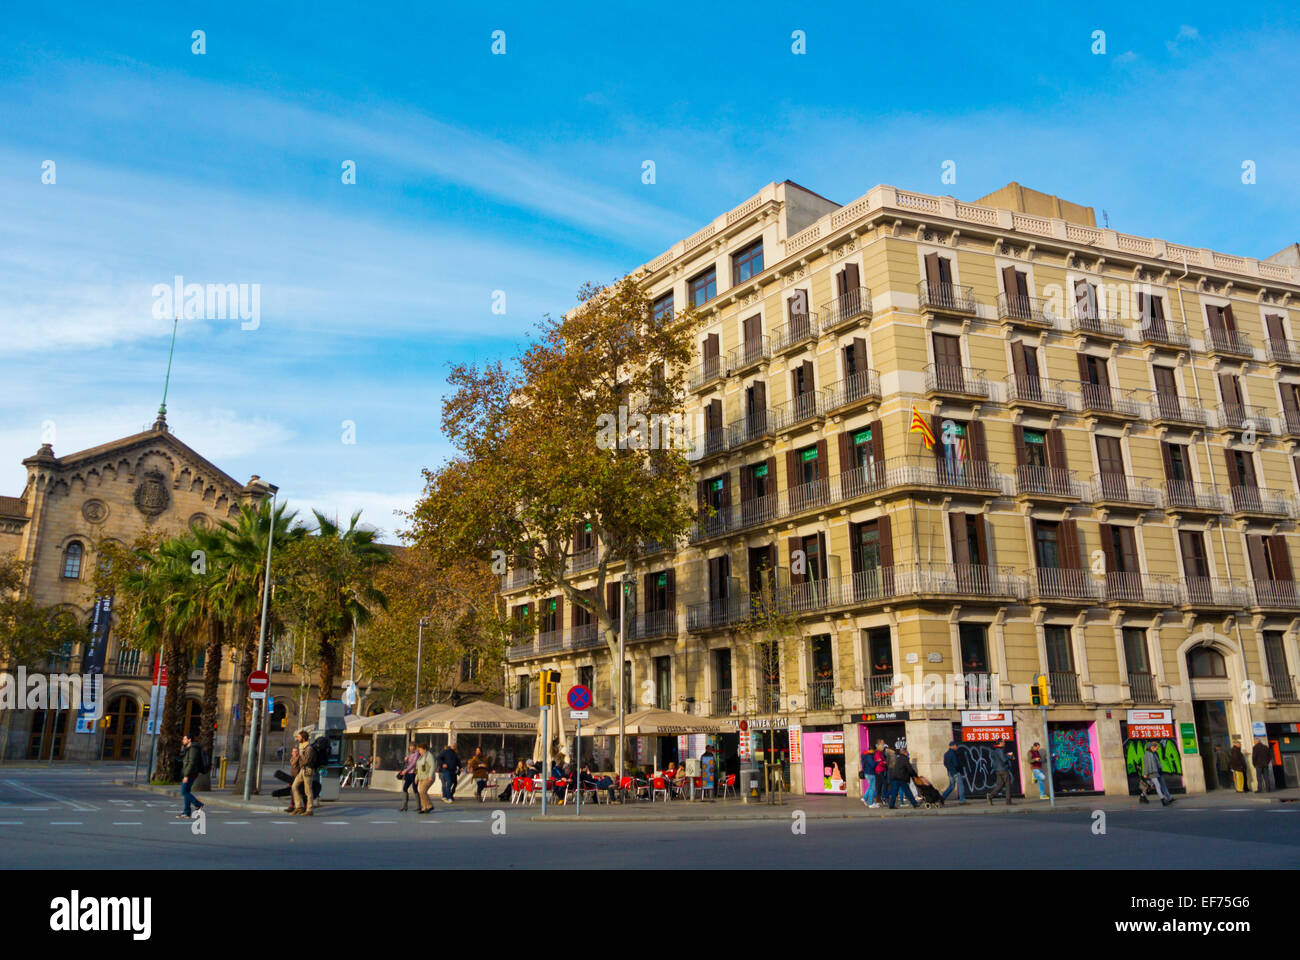 Plaça Universitat, la plaza en frente del edificio principal de la Universidad de Barcelona, España Foto de stock